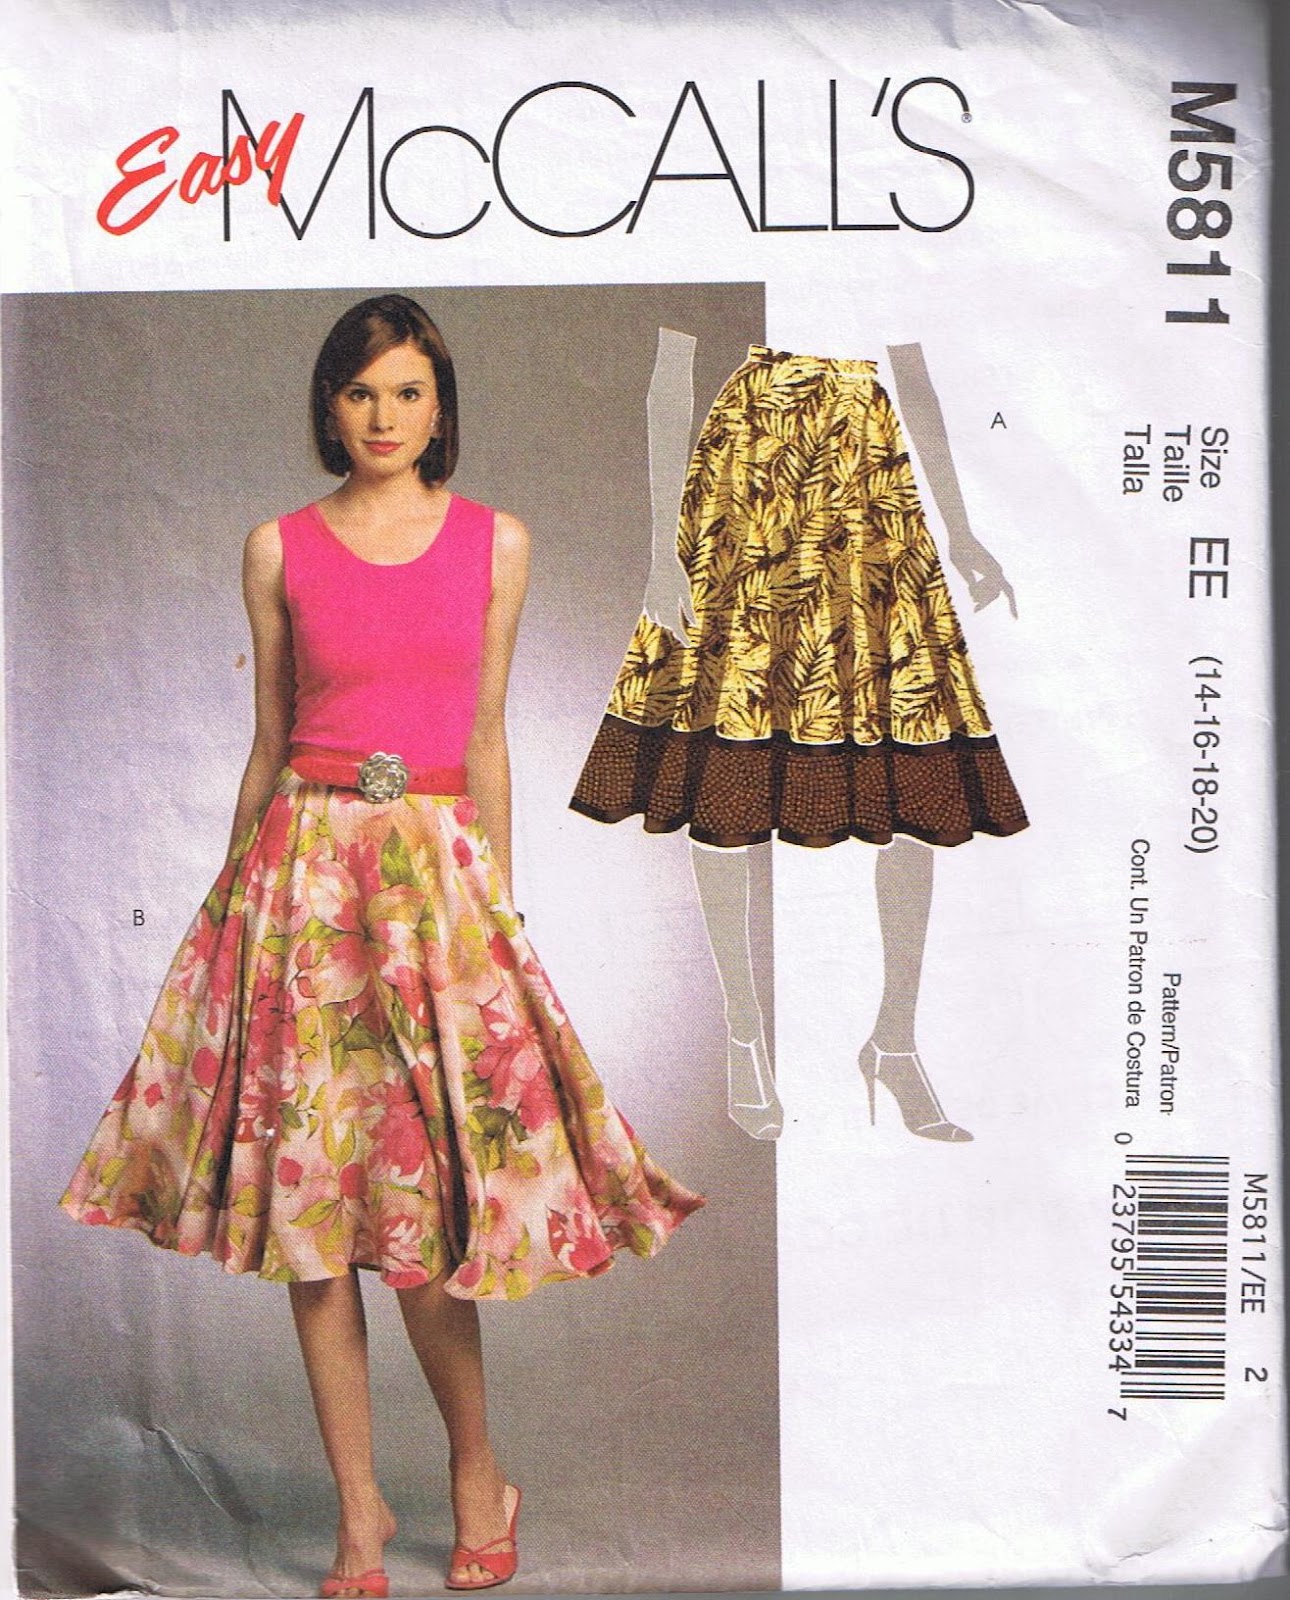 Jo-with-it's Portfolio: Sparkly Denim Circle Skirt